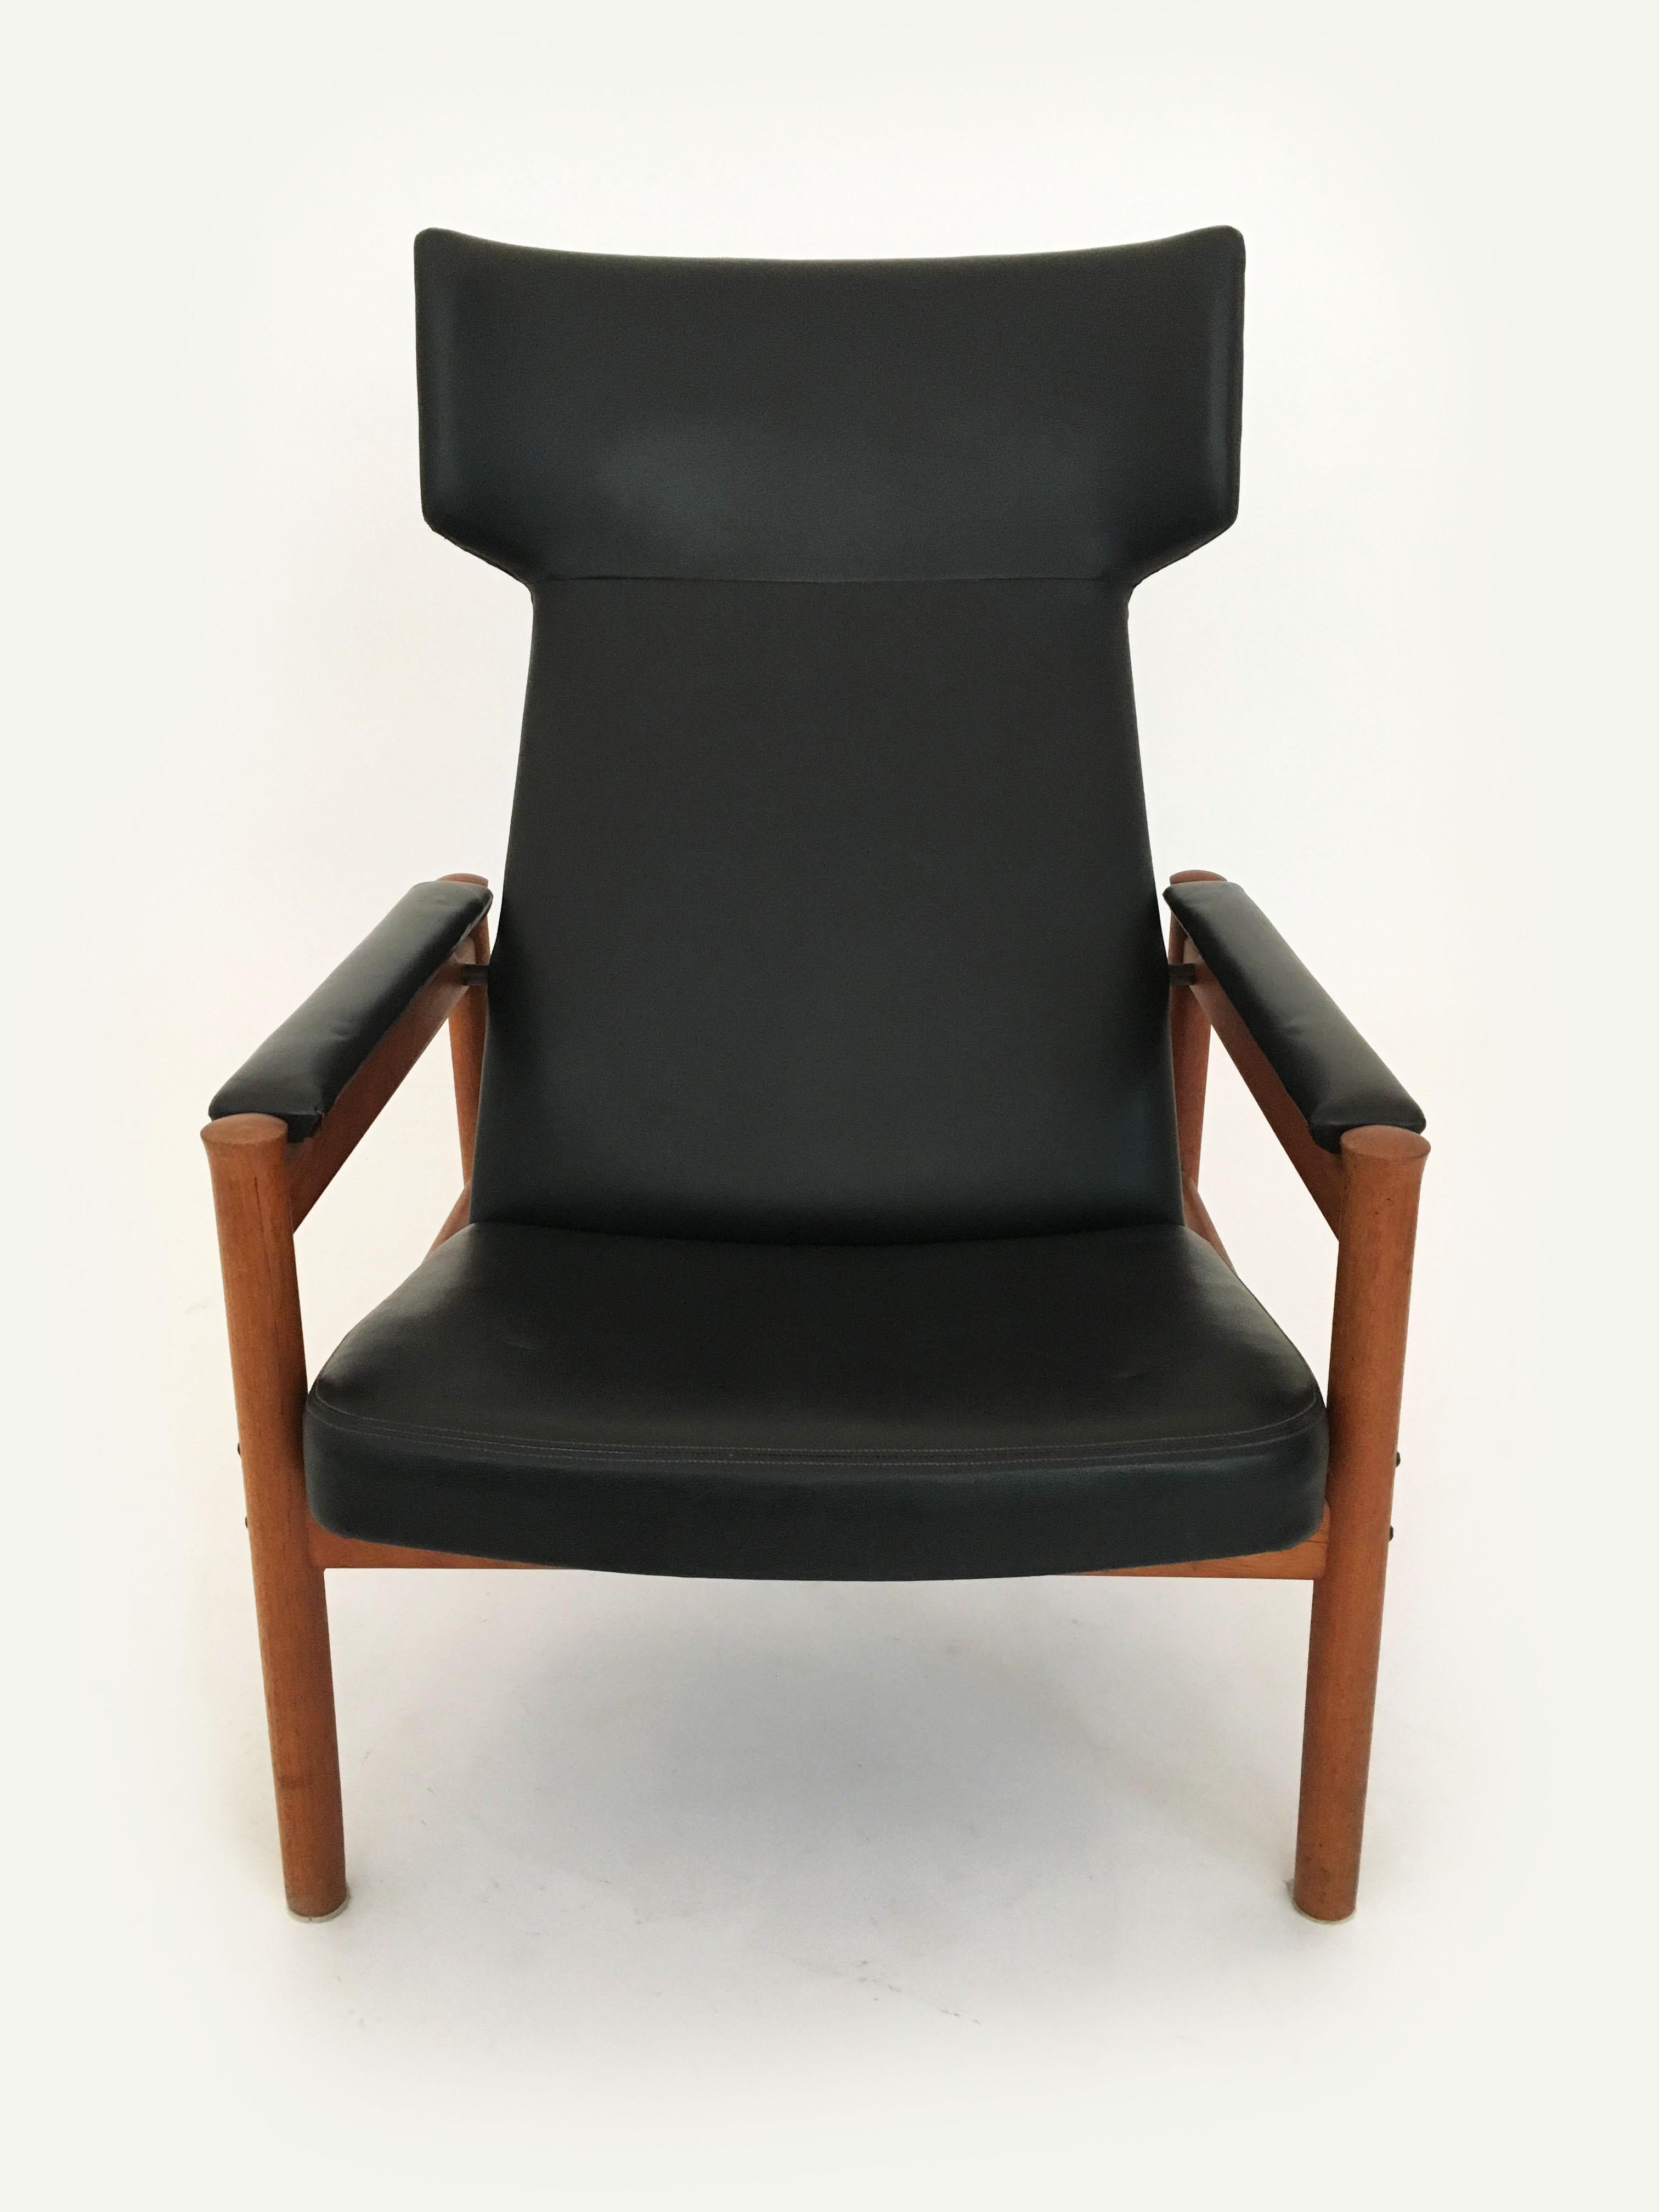 Mid-20th Century Scandinavian Modern Wing Chair and Ottoman by Soren Hansen for Fritz Hansen 1963 For Sale